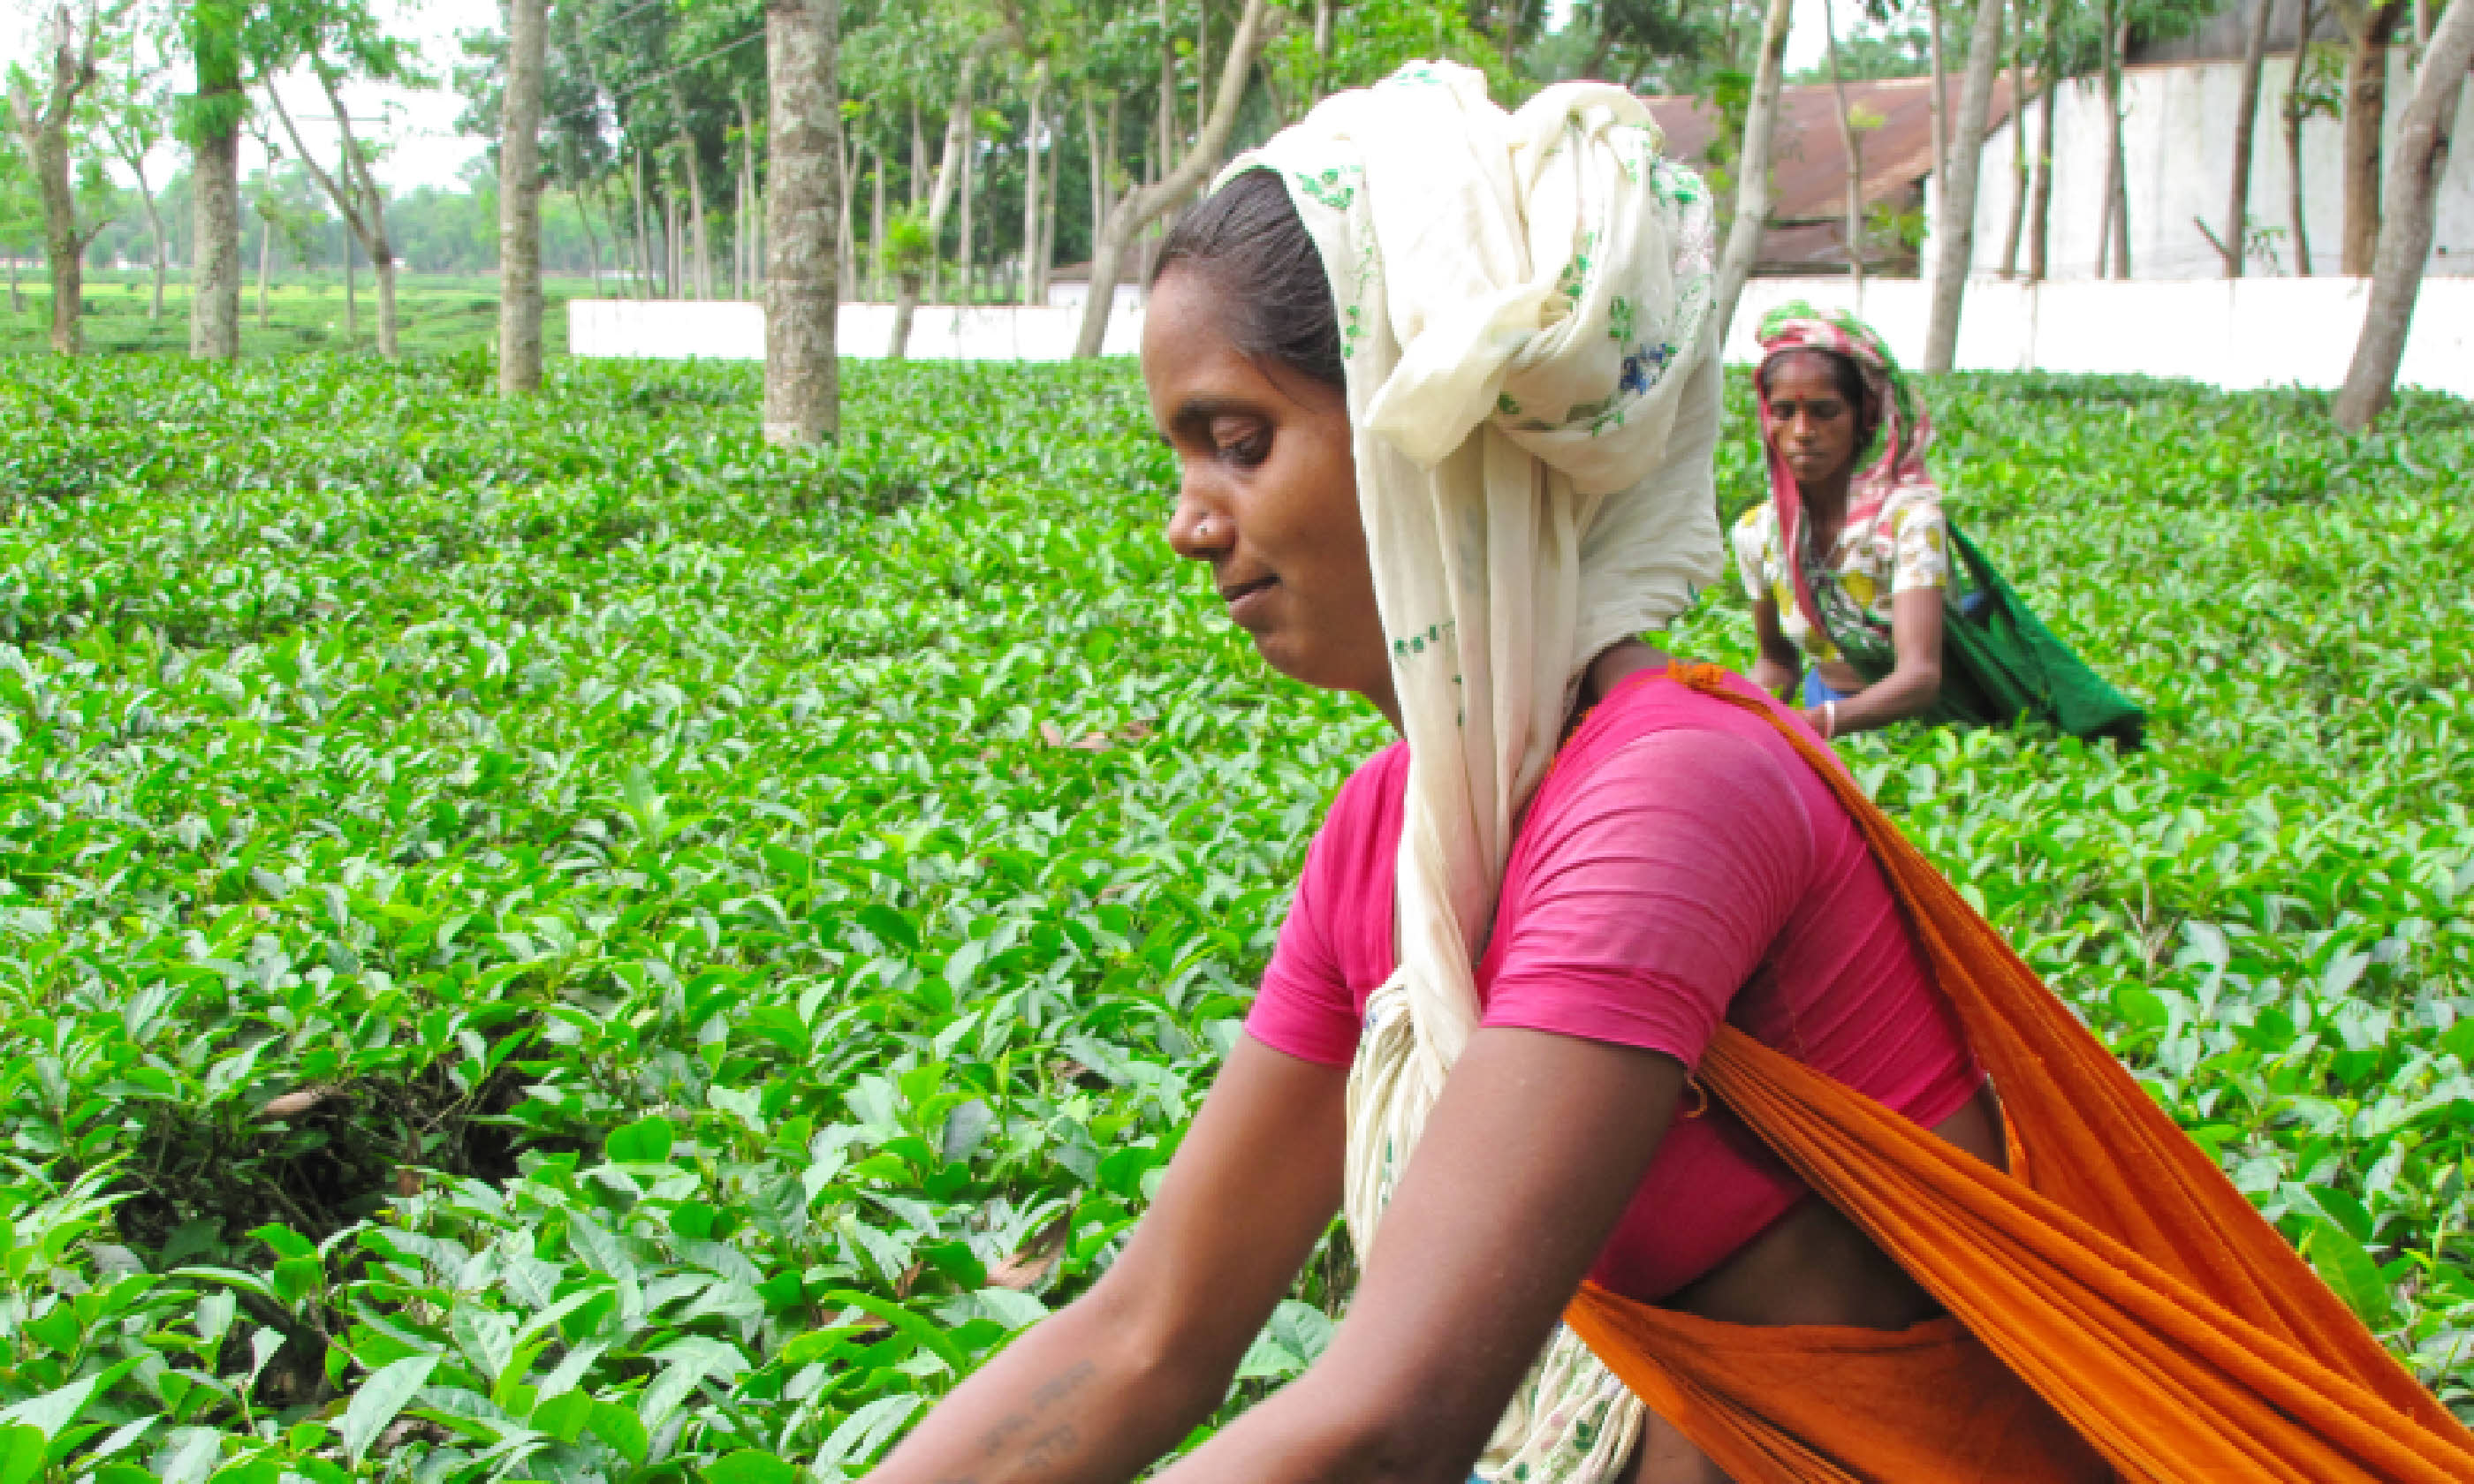 Tea picking in Bangladesh (Shutterstock: see credit below)